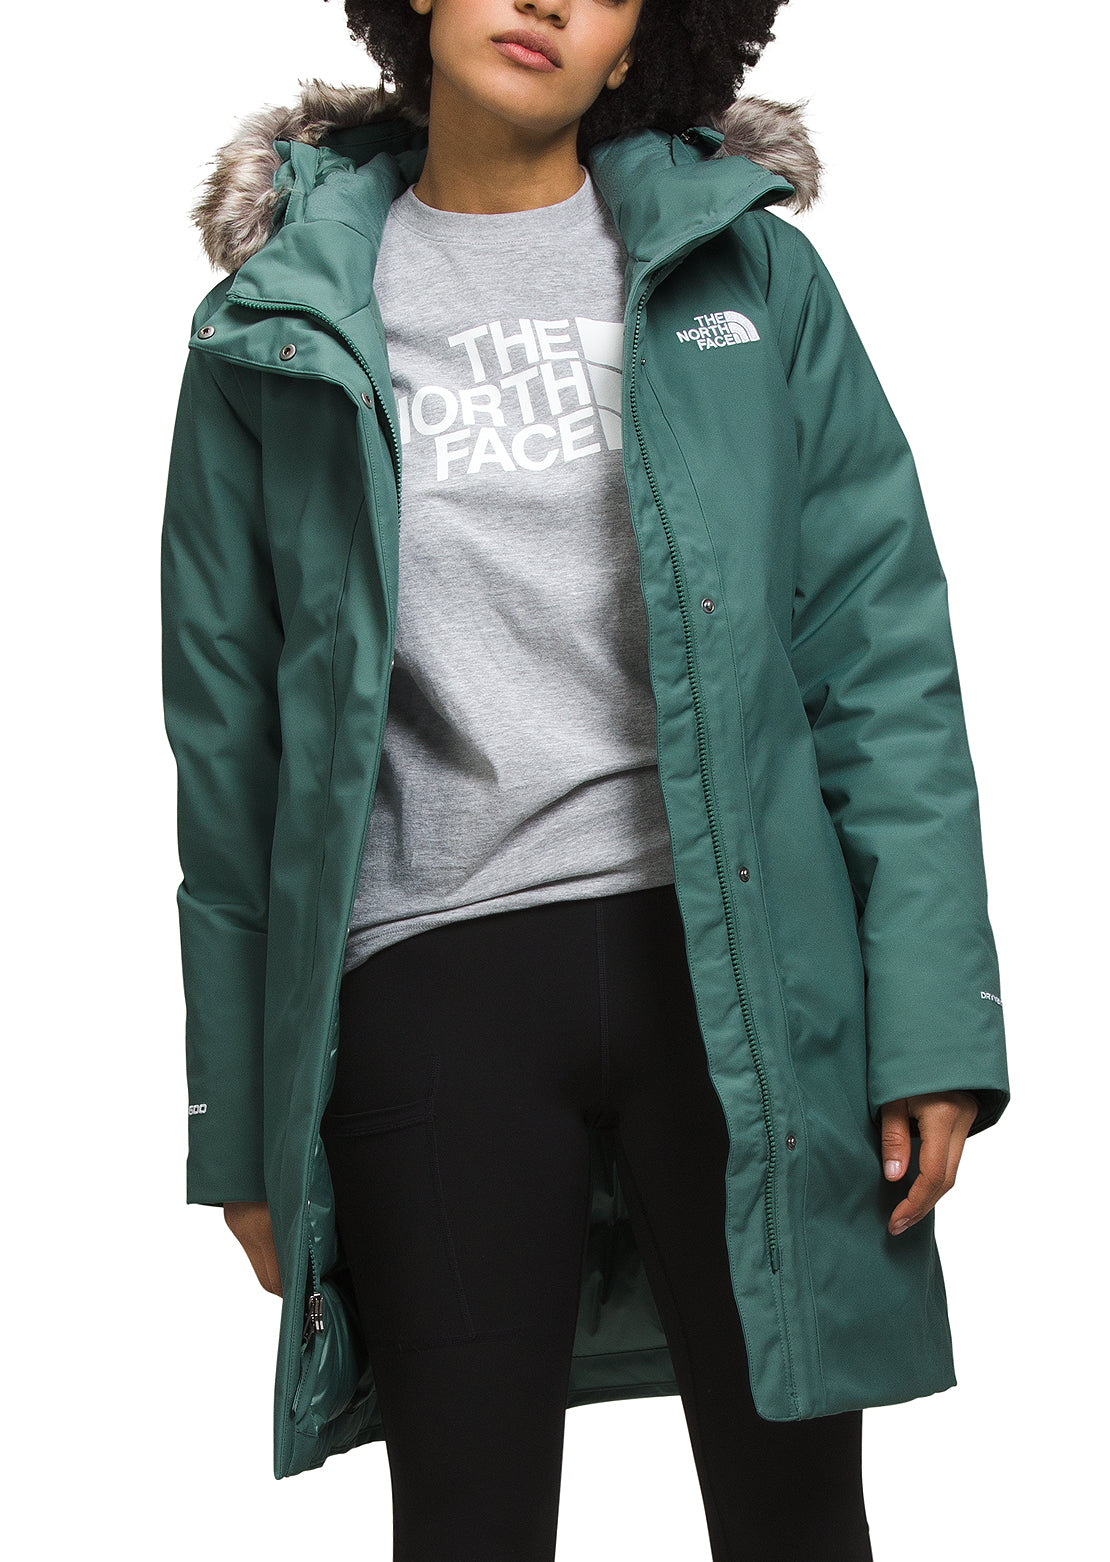 The North Face Women's Cragmont Fleece Jacket - PRFO Sports